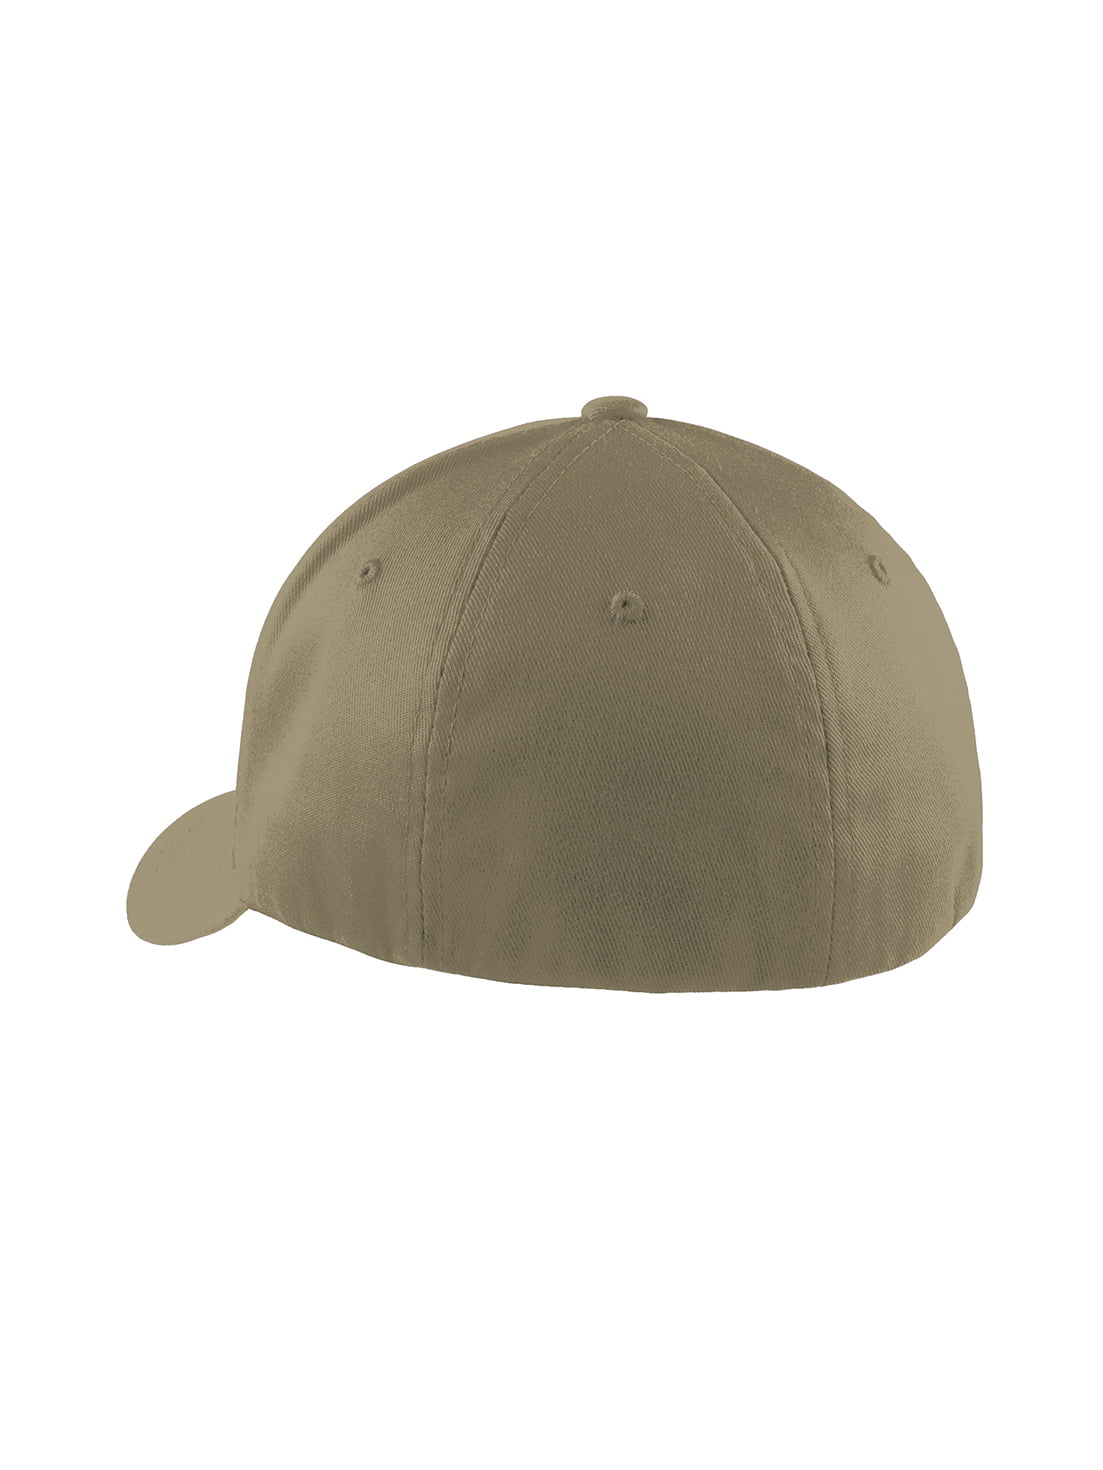 Top Headwear Flex Fit Baseball Cap - Woodland Brown - Large/X-Large